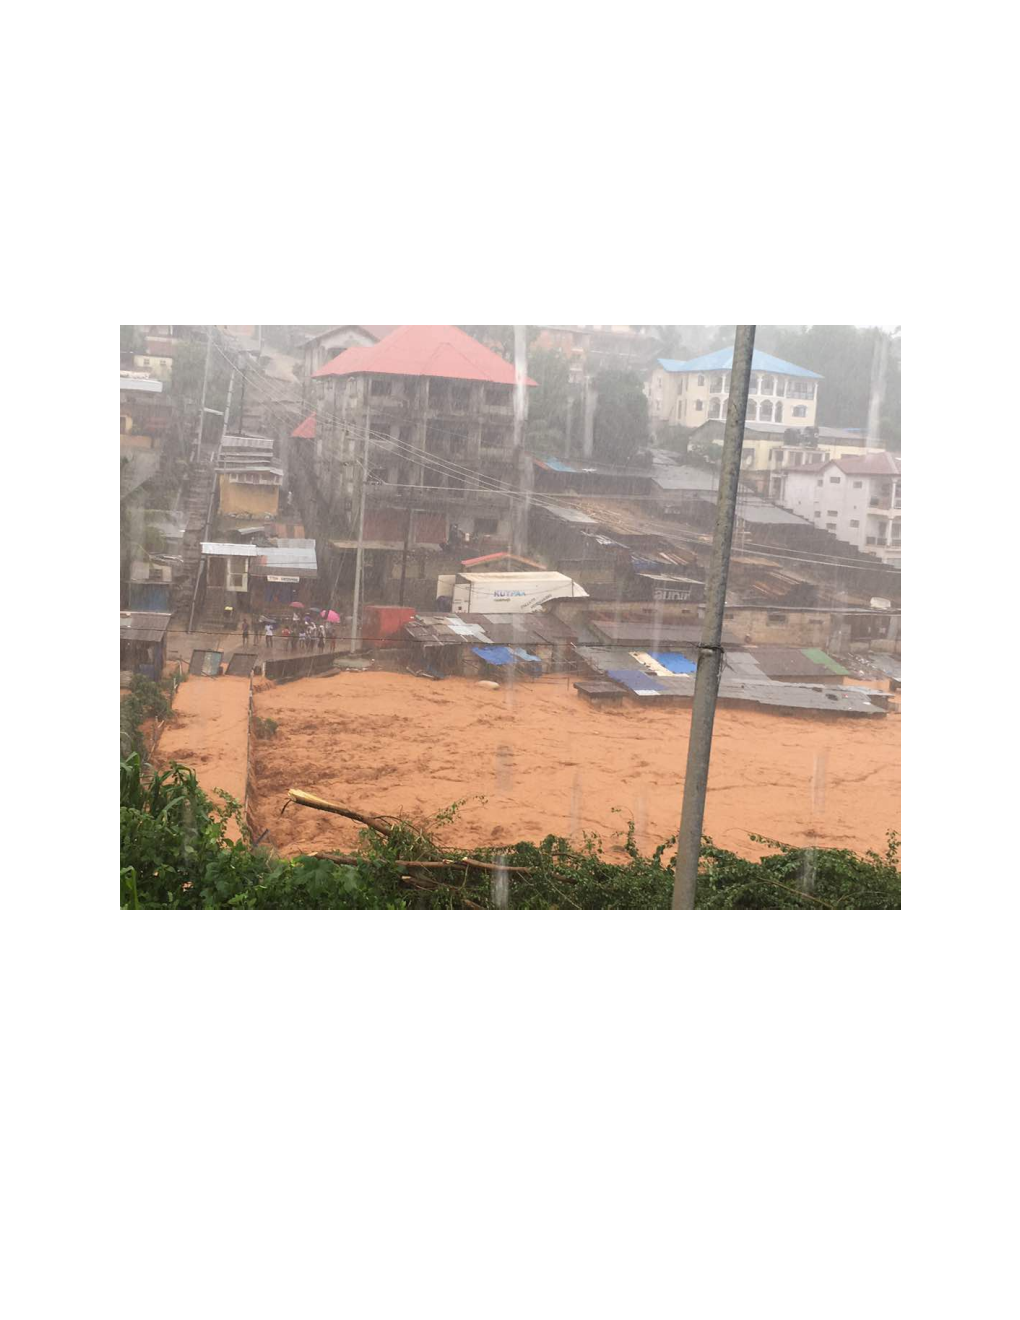 Sierra Leone Ymca Concept on Disaster Response